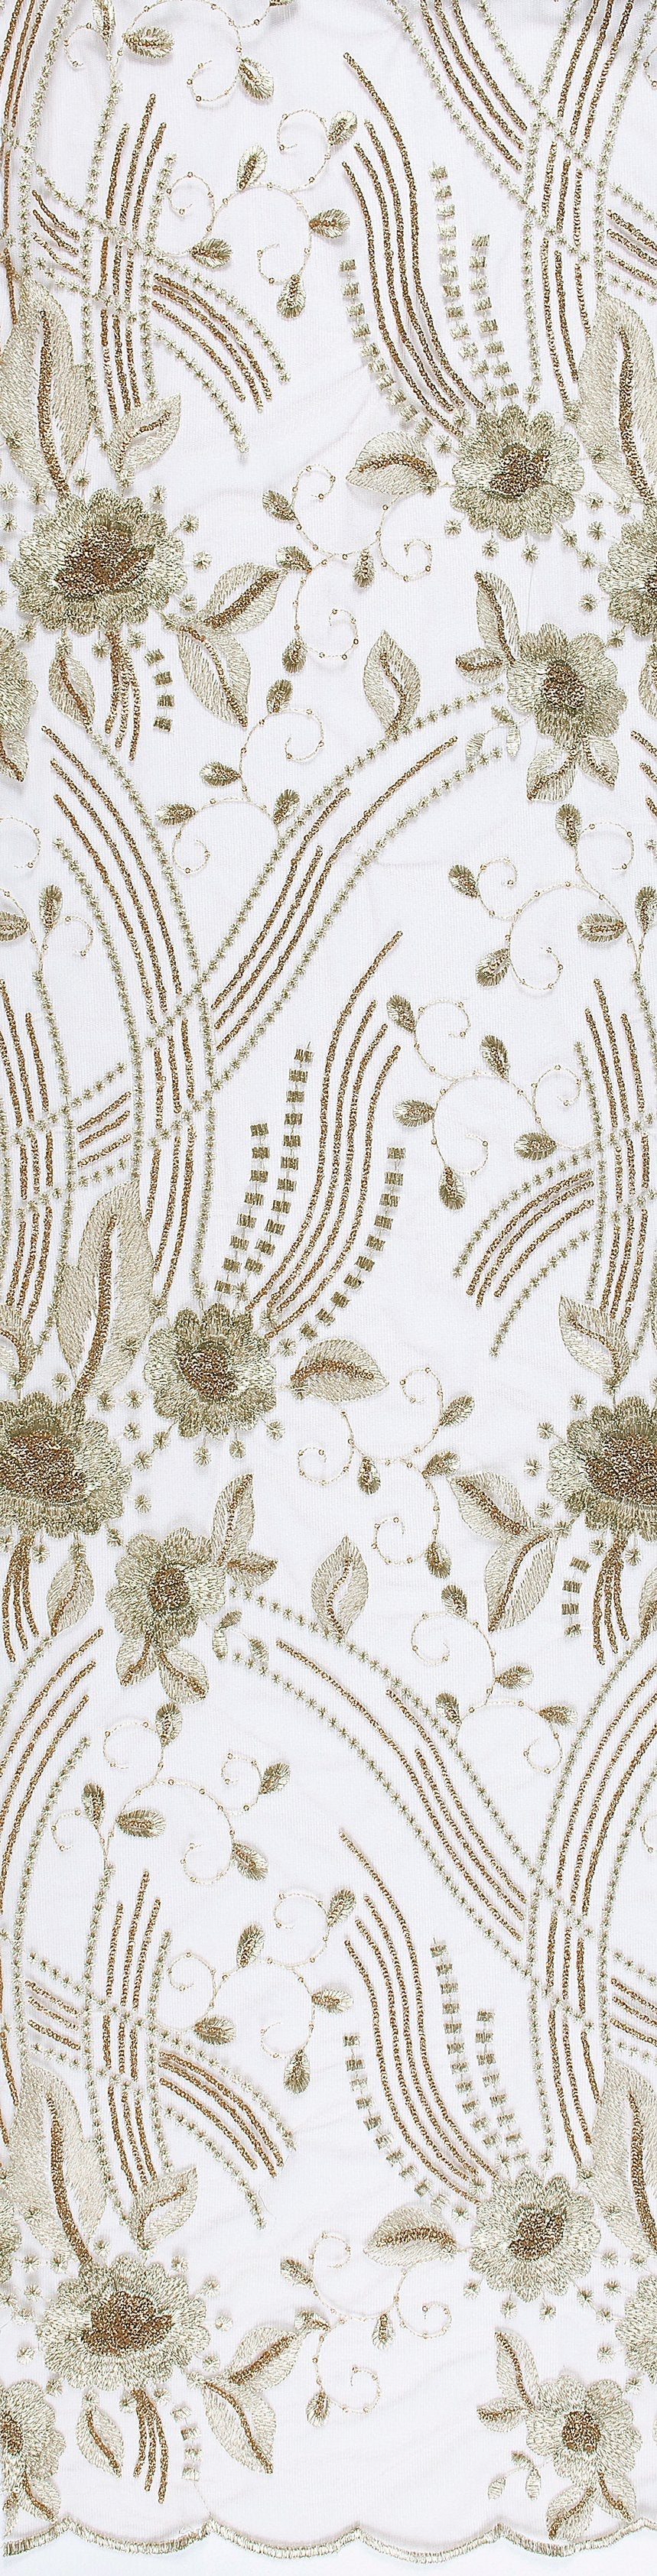 Gold Glitter Shiny Sequin Embroidered Fabric | Burç Fabric